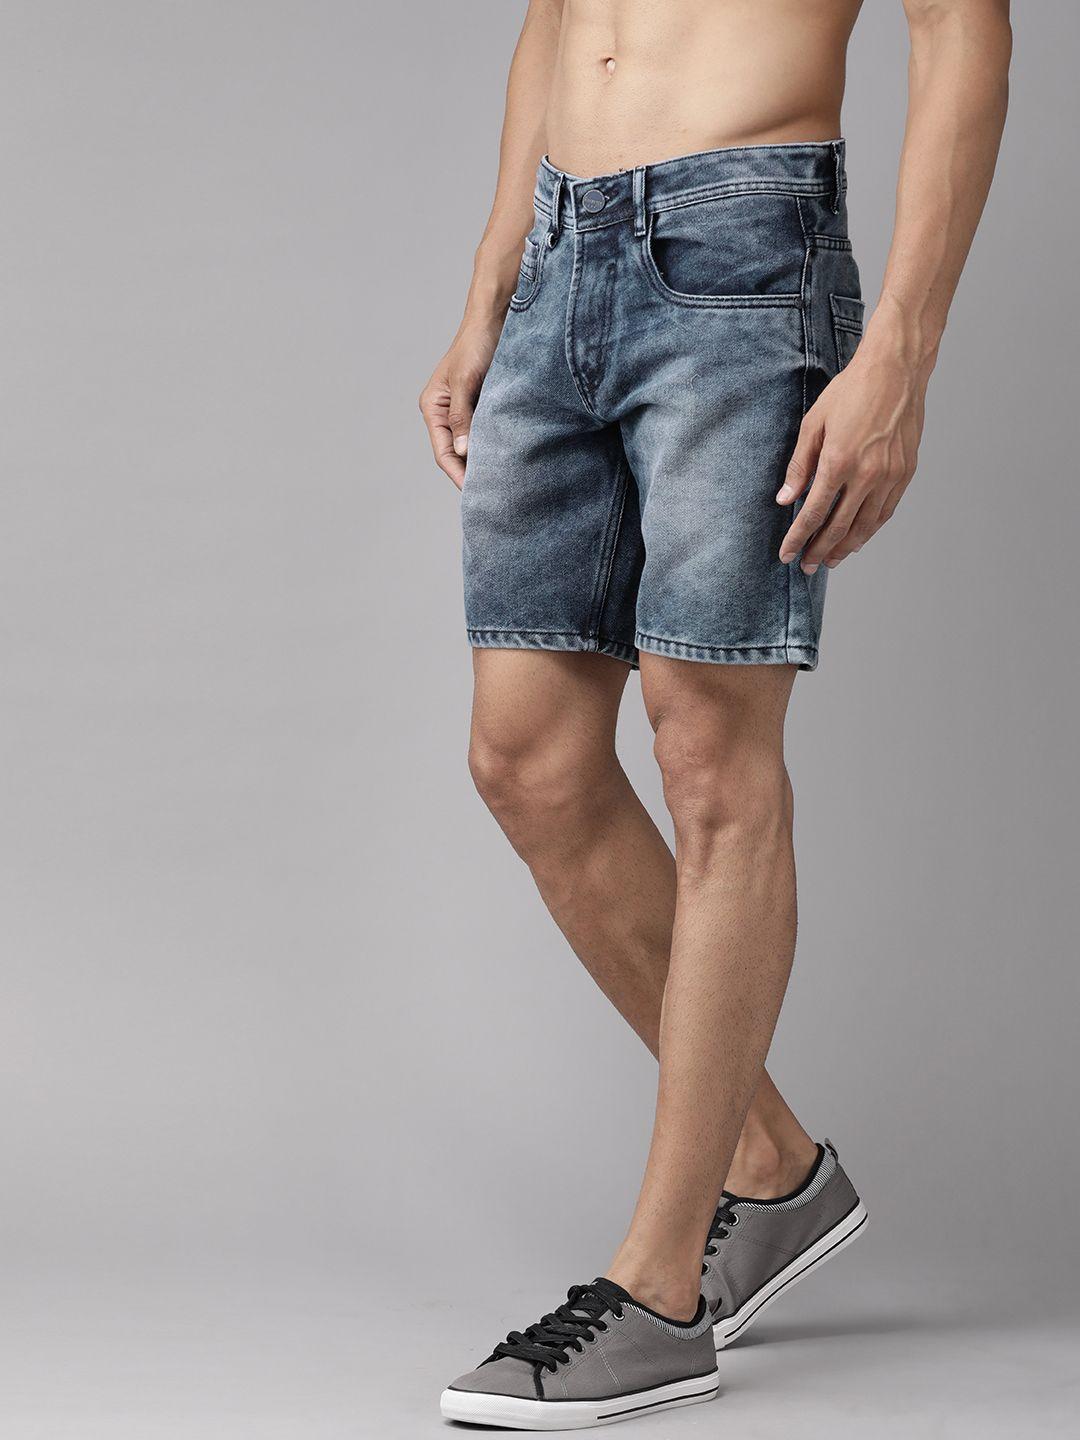 the roadster lifestyle co men navy blue solid slim fit denim shorts